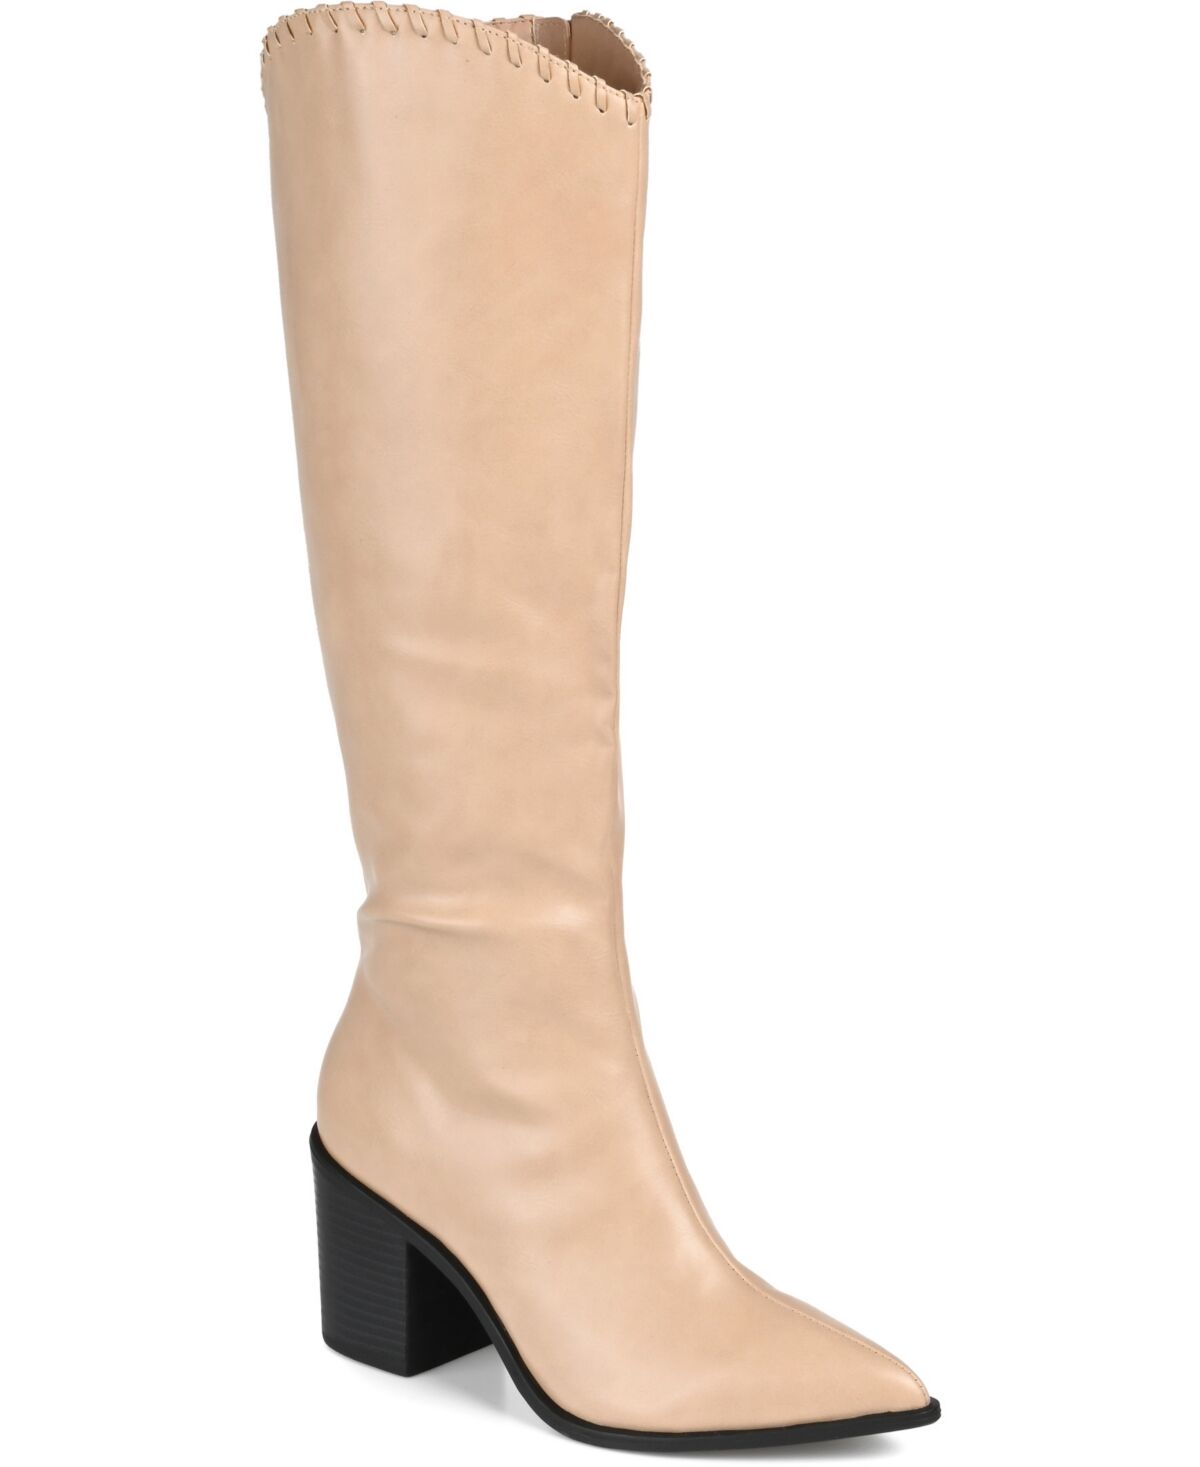 Journee Collection Women's Daria Wide Calf Cowboy Knee High Boots - Tan